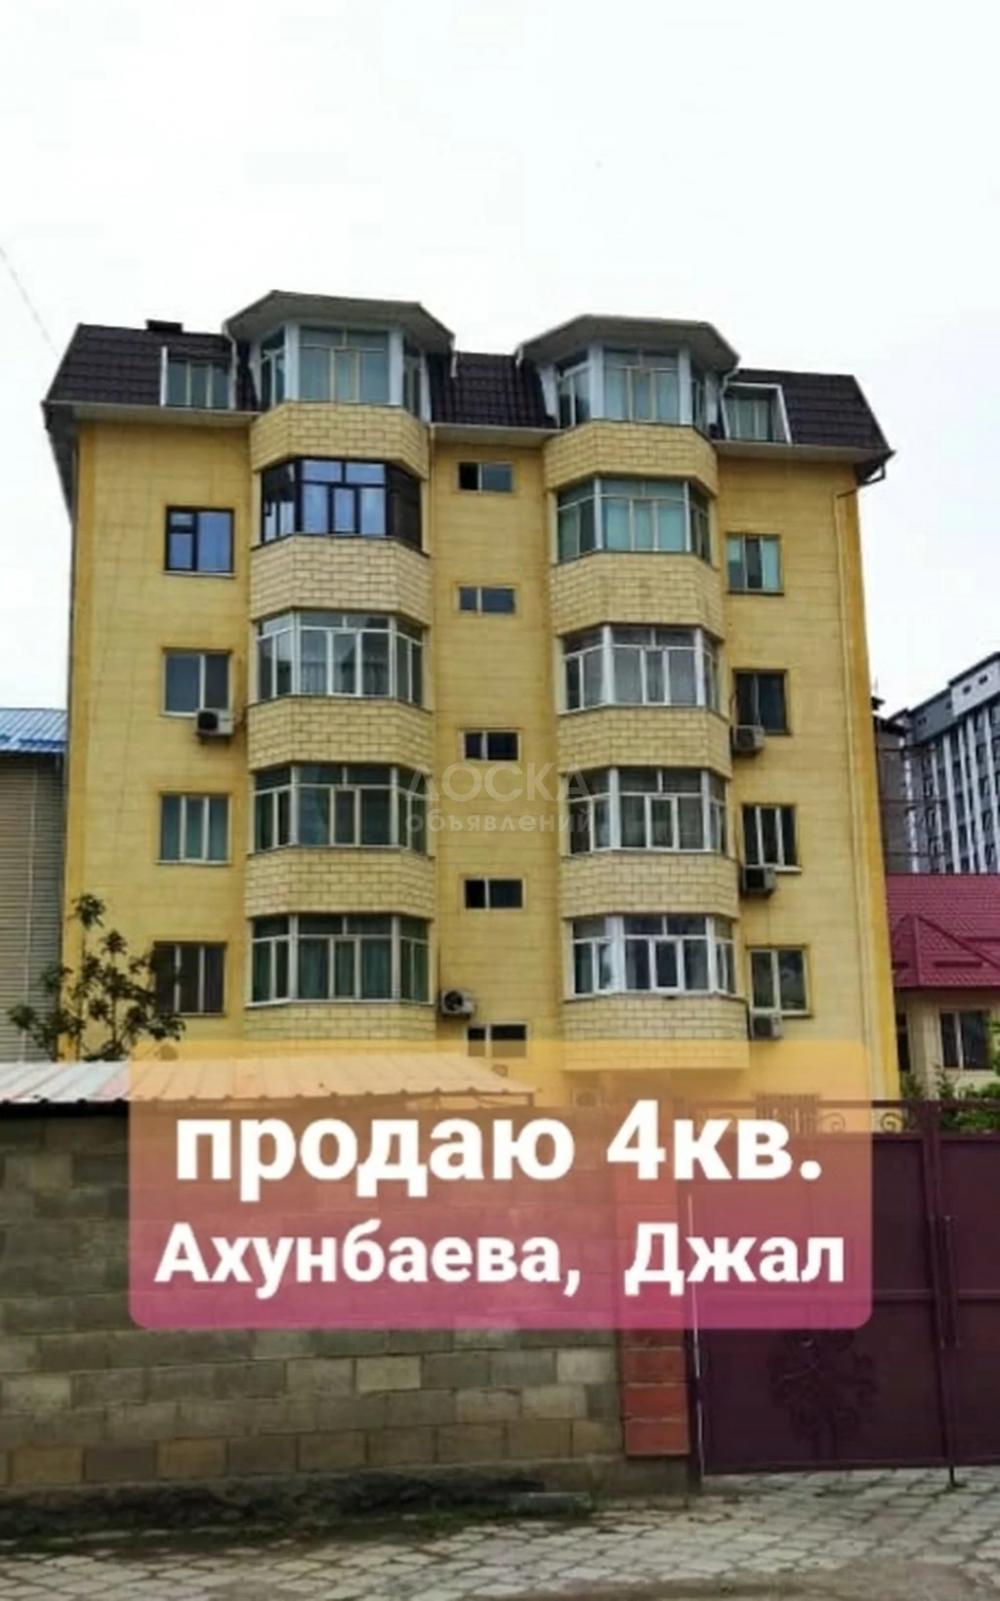 Продаю 4-комнатную квартиру, 111кв. м., этаж - 1/5, Ахунбаева,  р-н мкр.Джал.